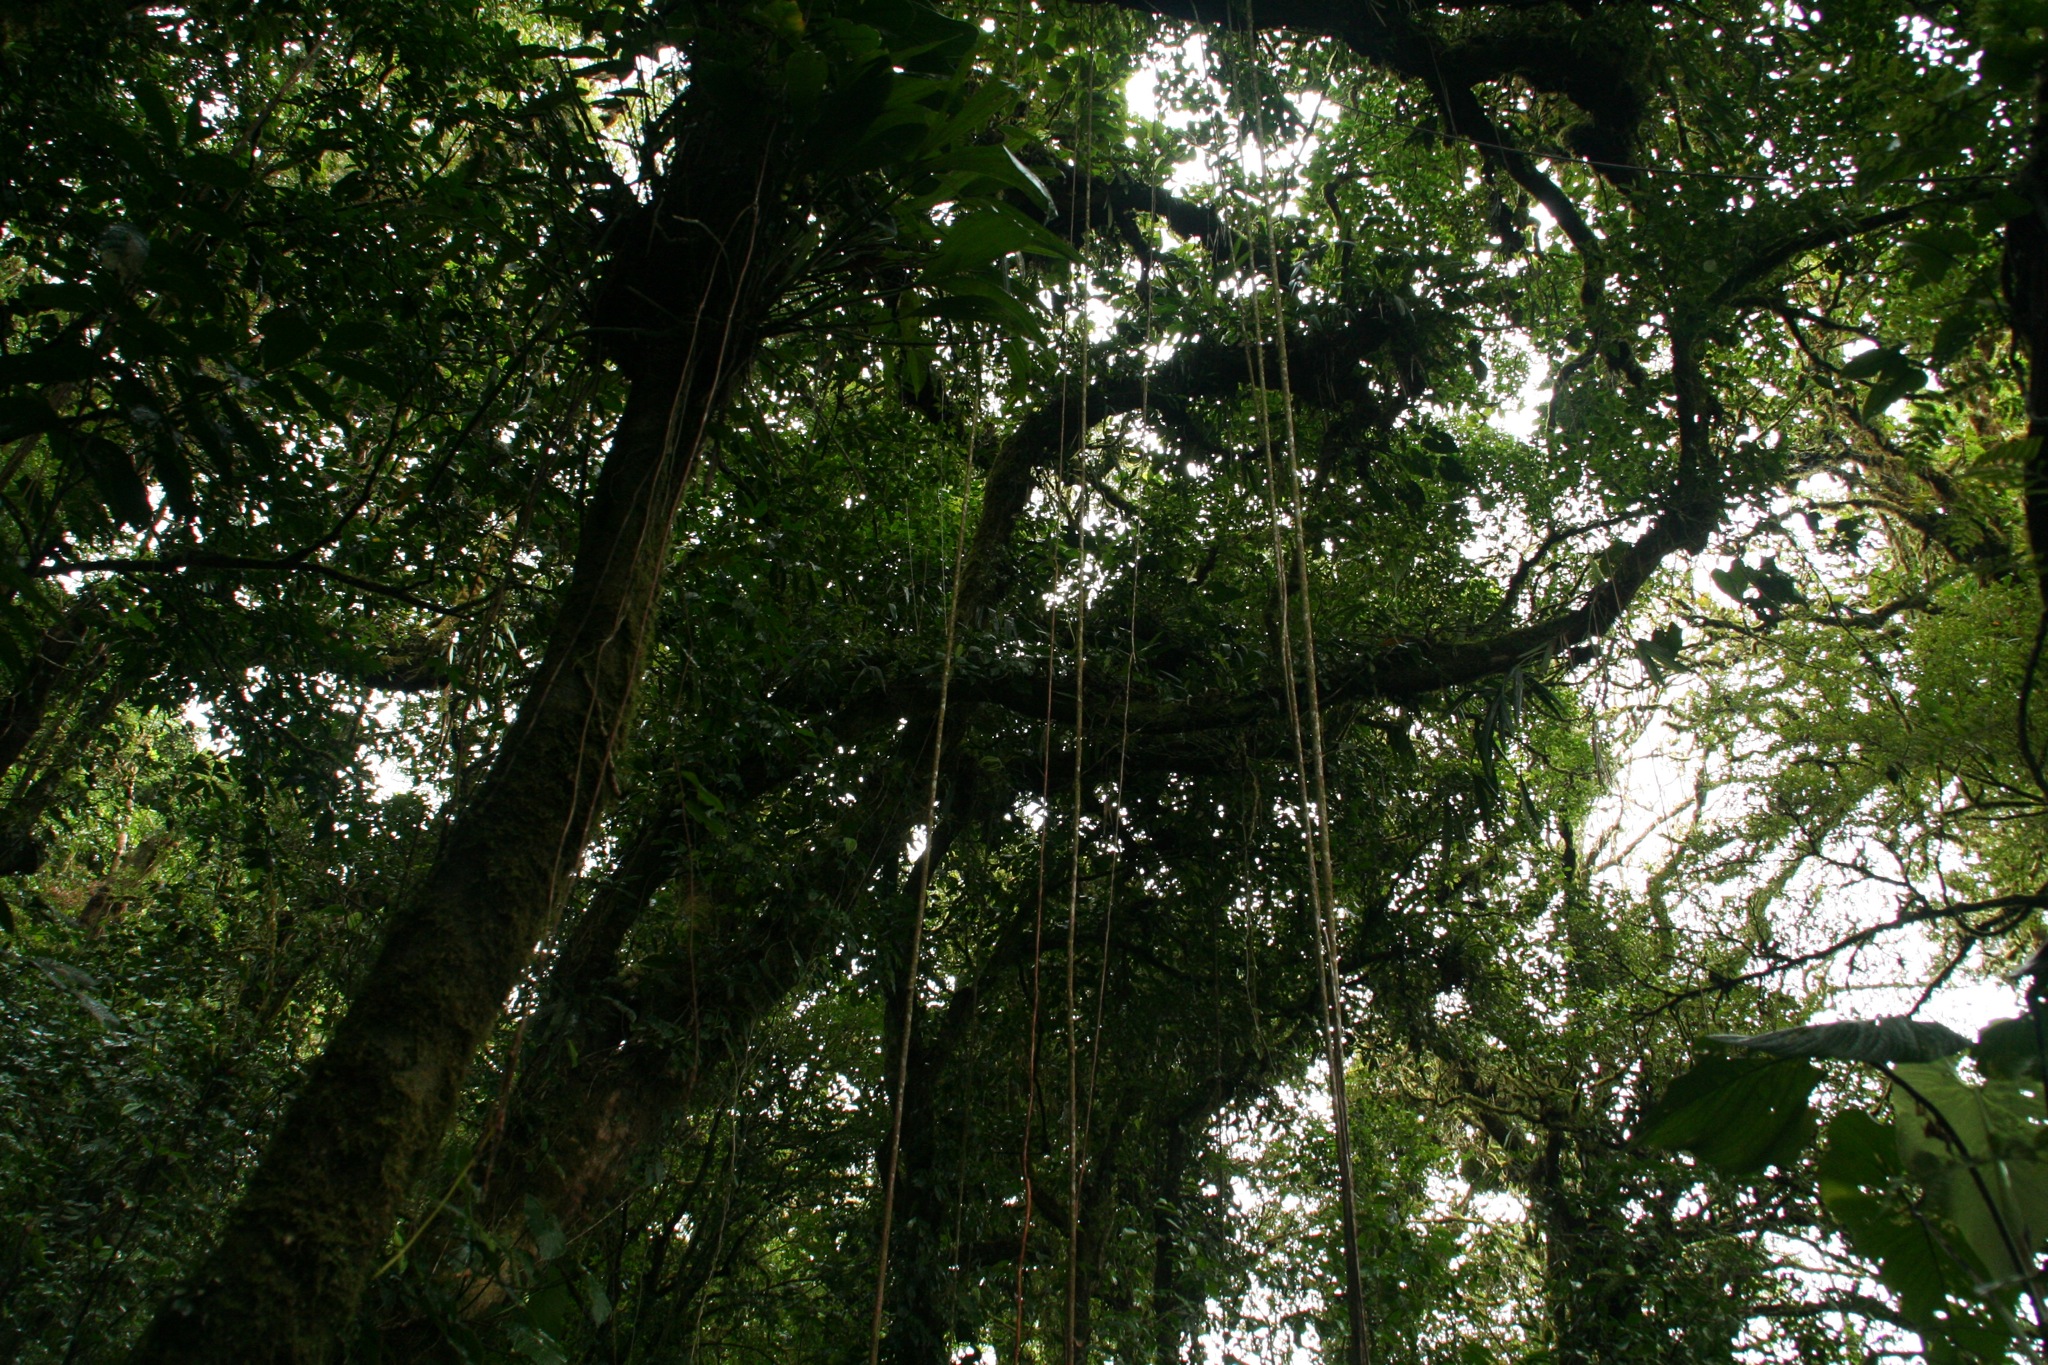 a person on a zip line climbing through the jungle